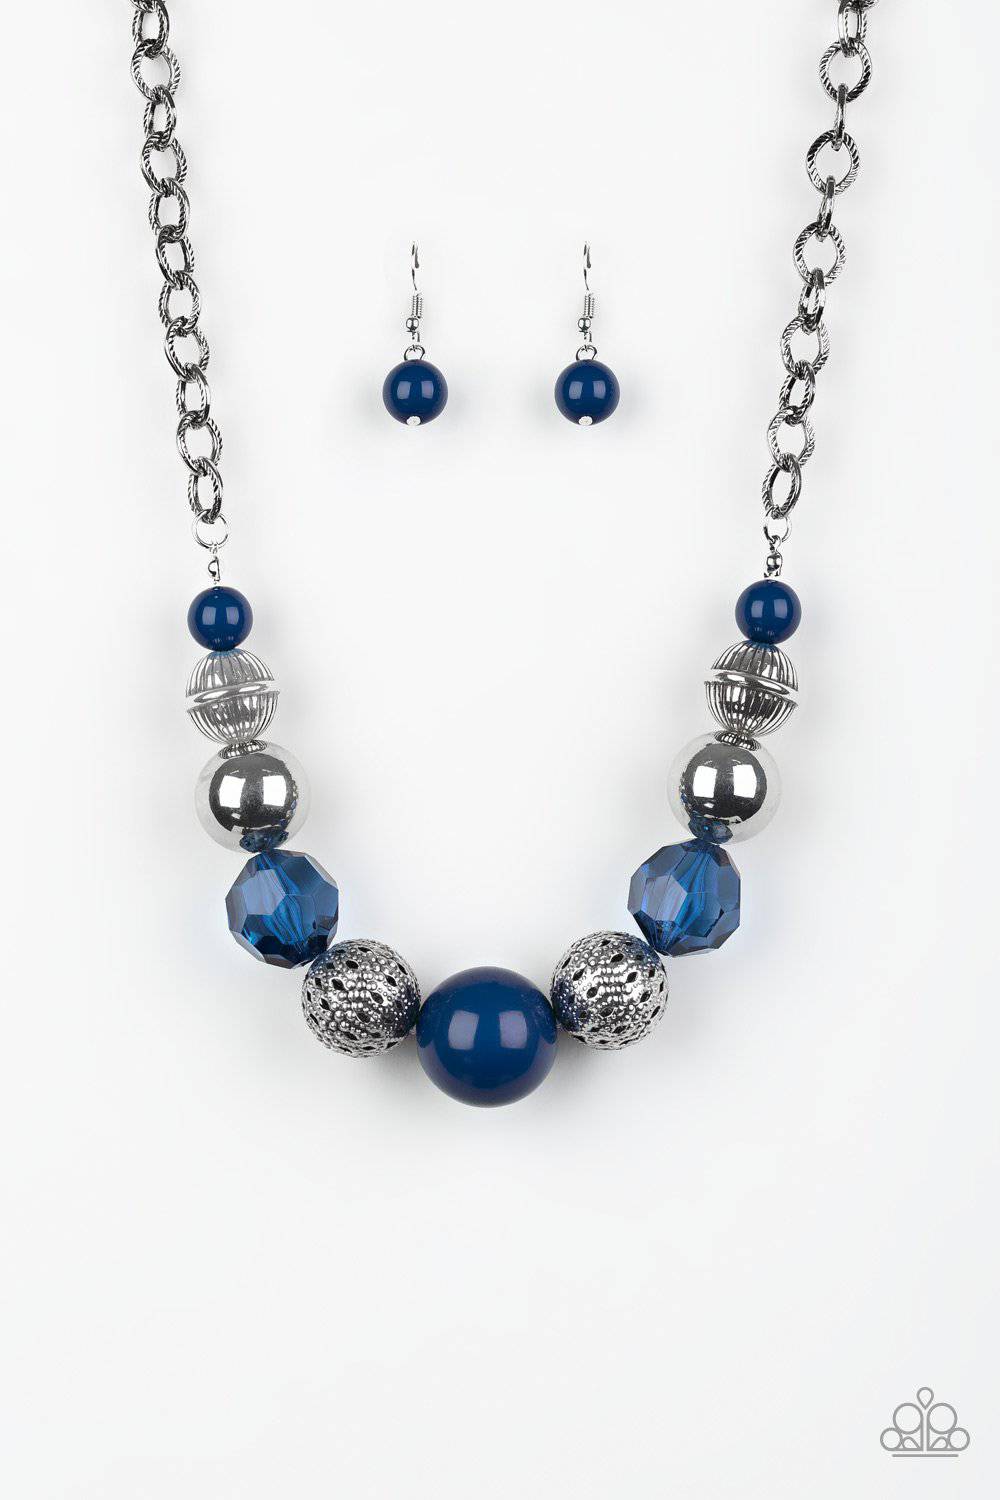 Sugar, Sugar - Blue Bead Necklace - Paparazzi Accessories - GlaMarous Titi Jewels